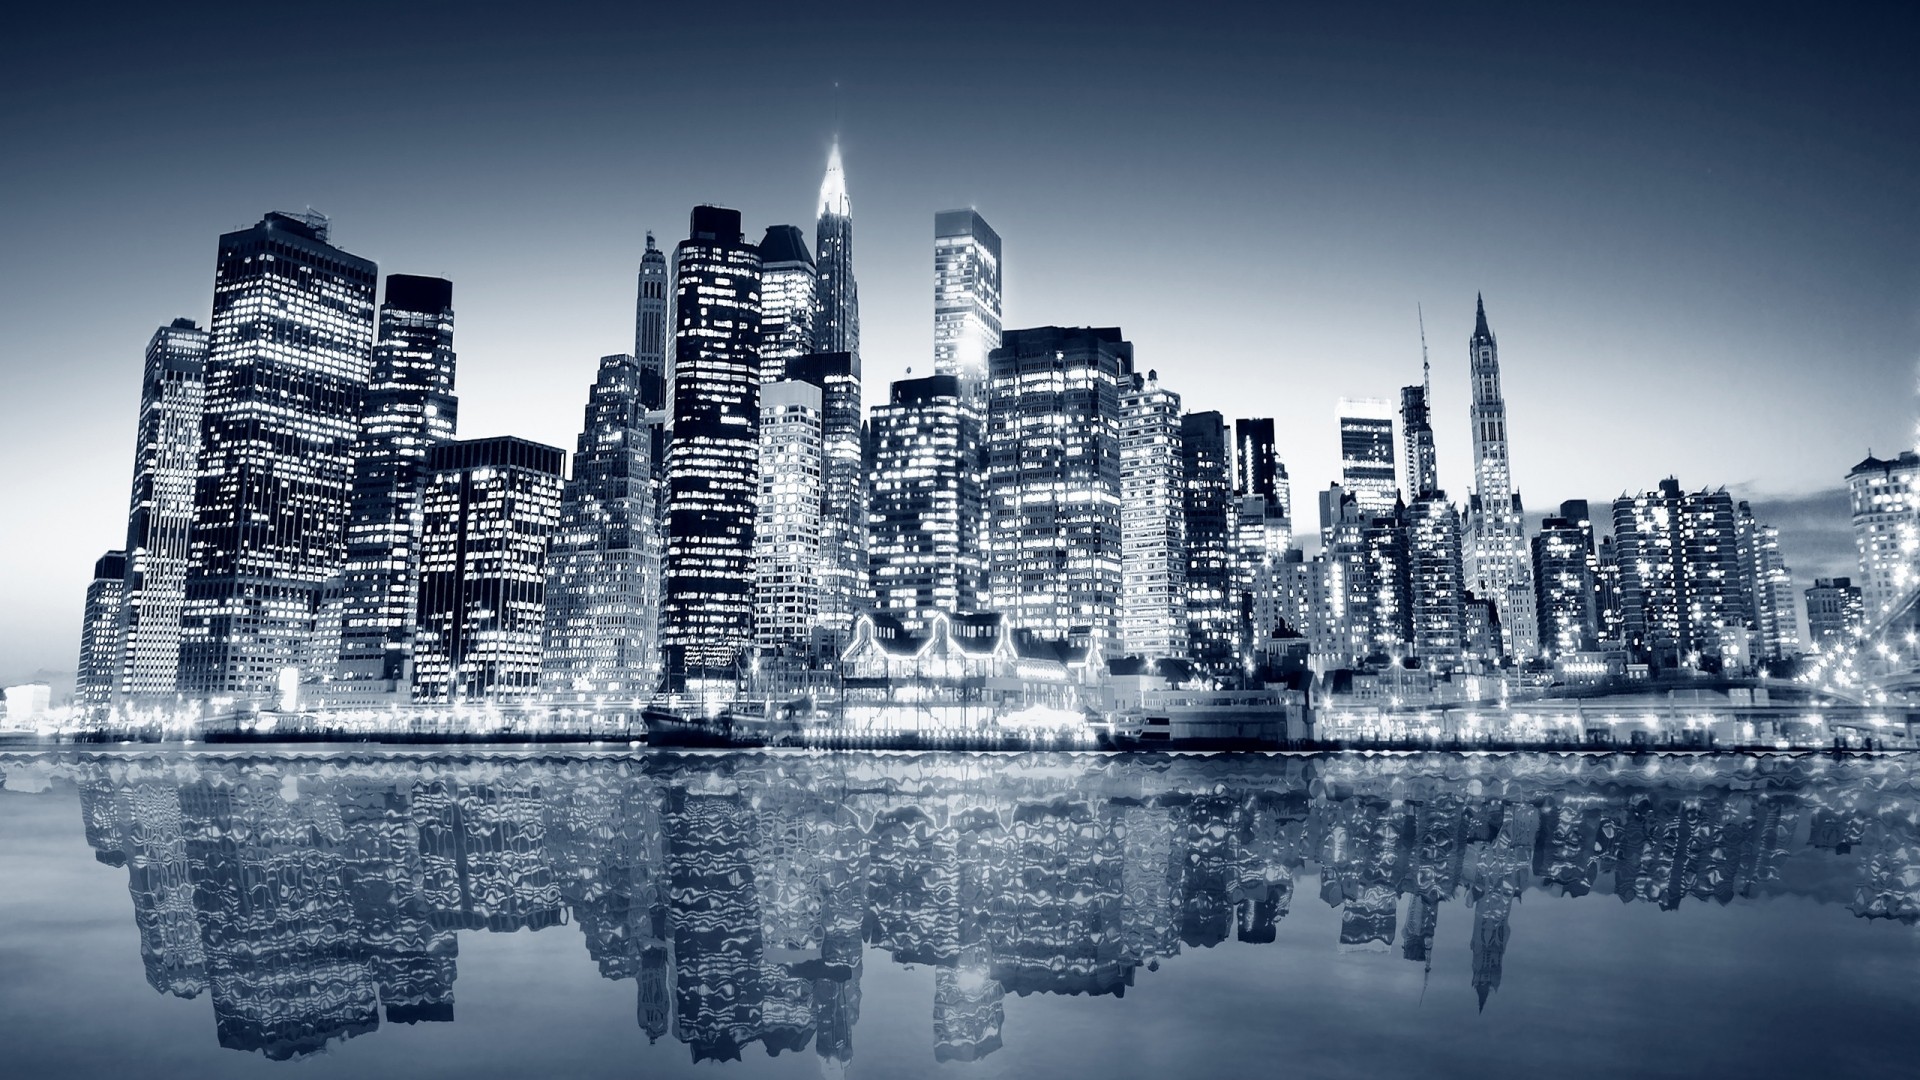 Cool Pictures New York City HD Wallpaper of City   hdwallpaper2013com 1920x1080